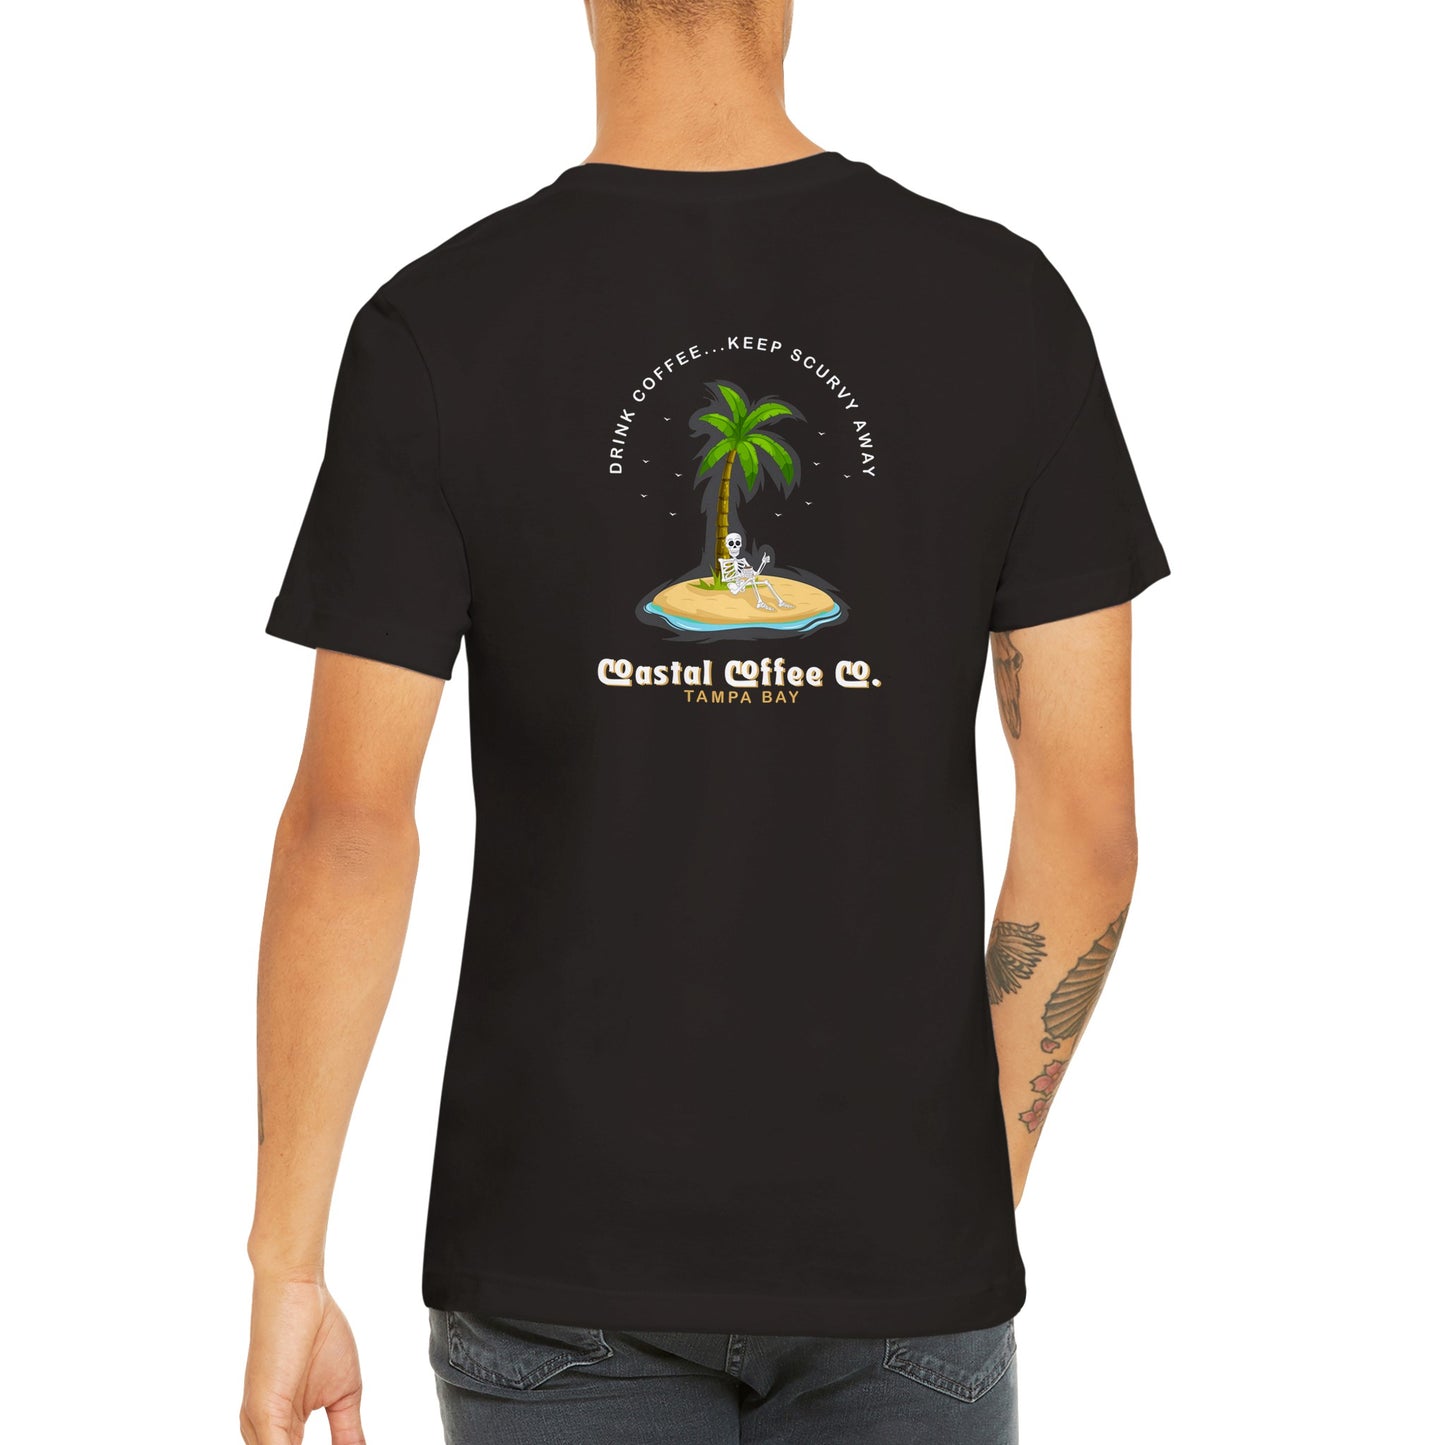 Scurvy Awareness T-Shirt (FREE SHIPPING!)